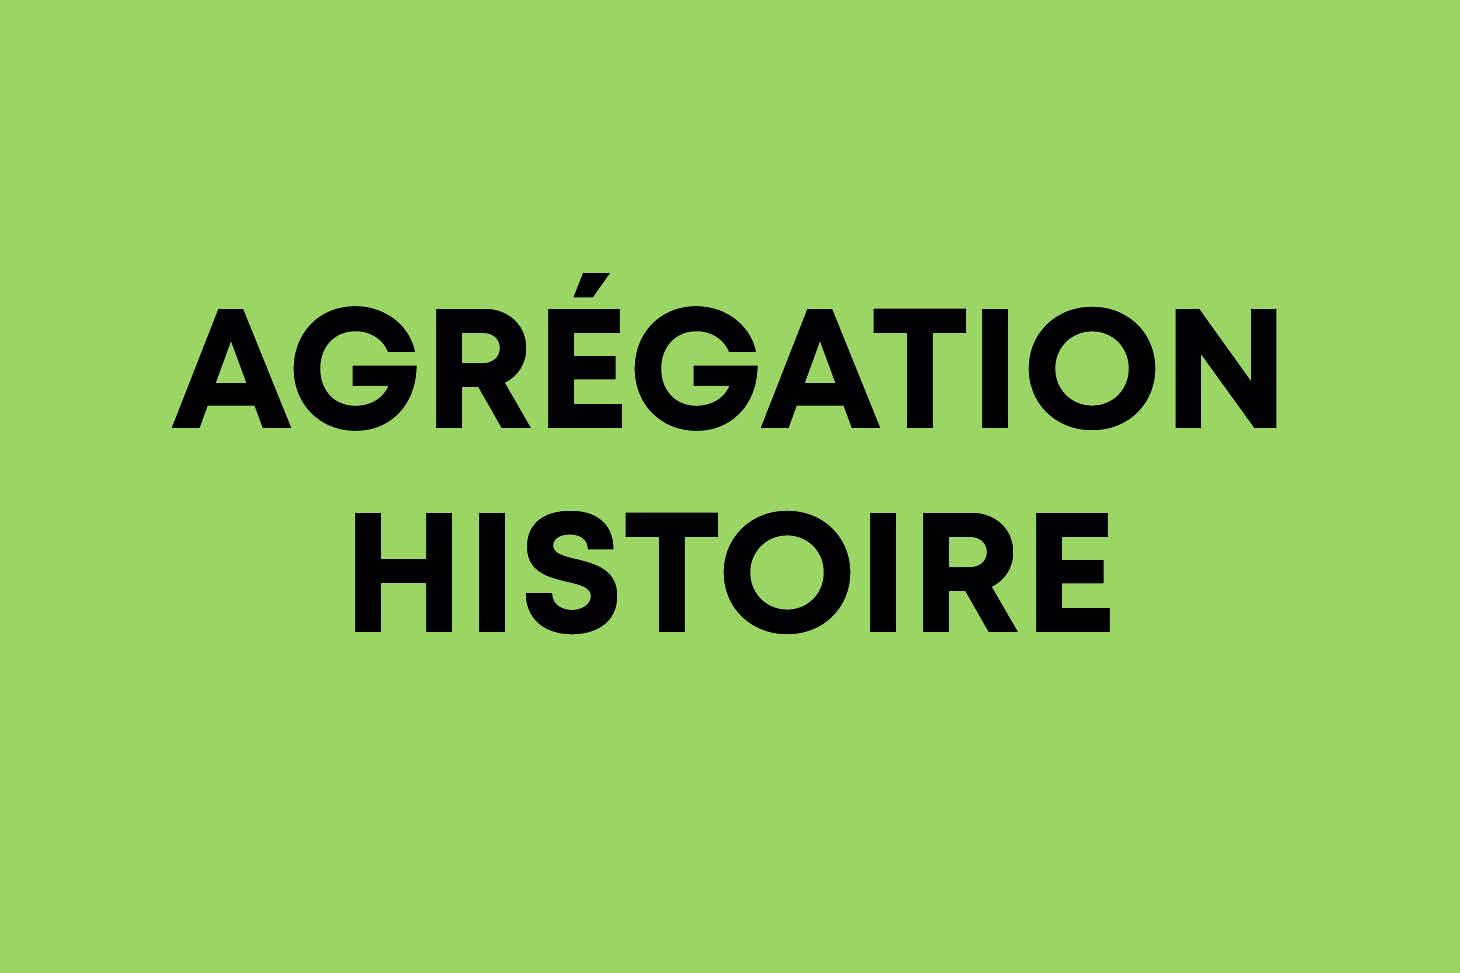 Agrégation histoire